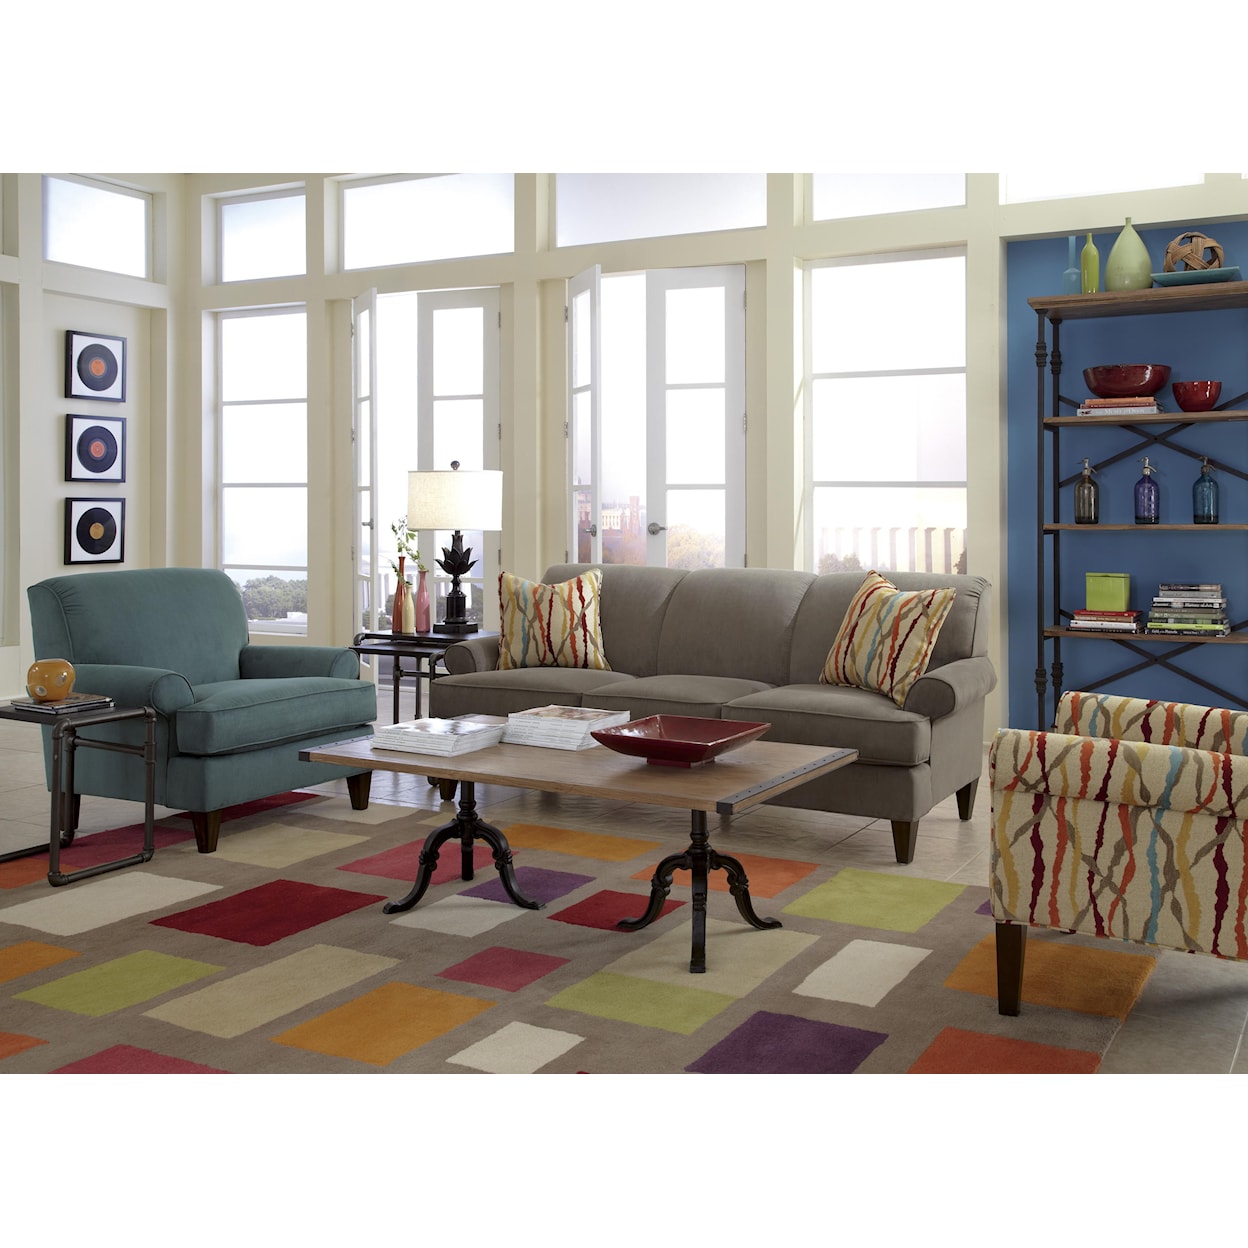 Flexsteel Venture Stationary Living Room Group